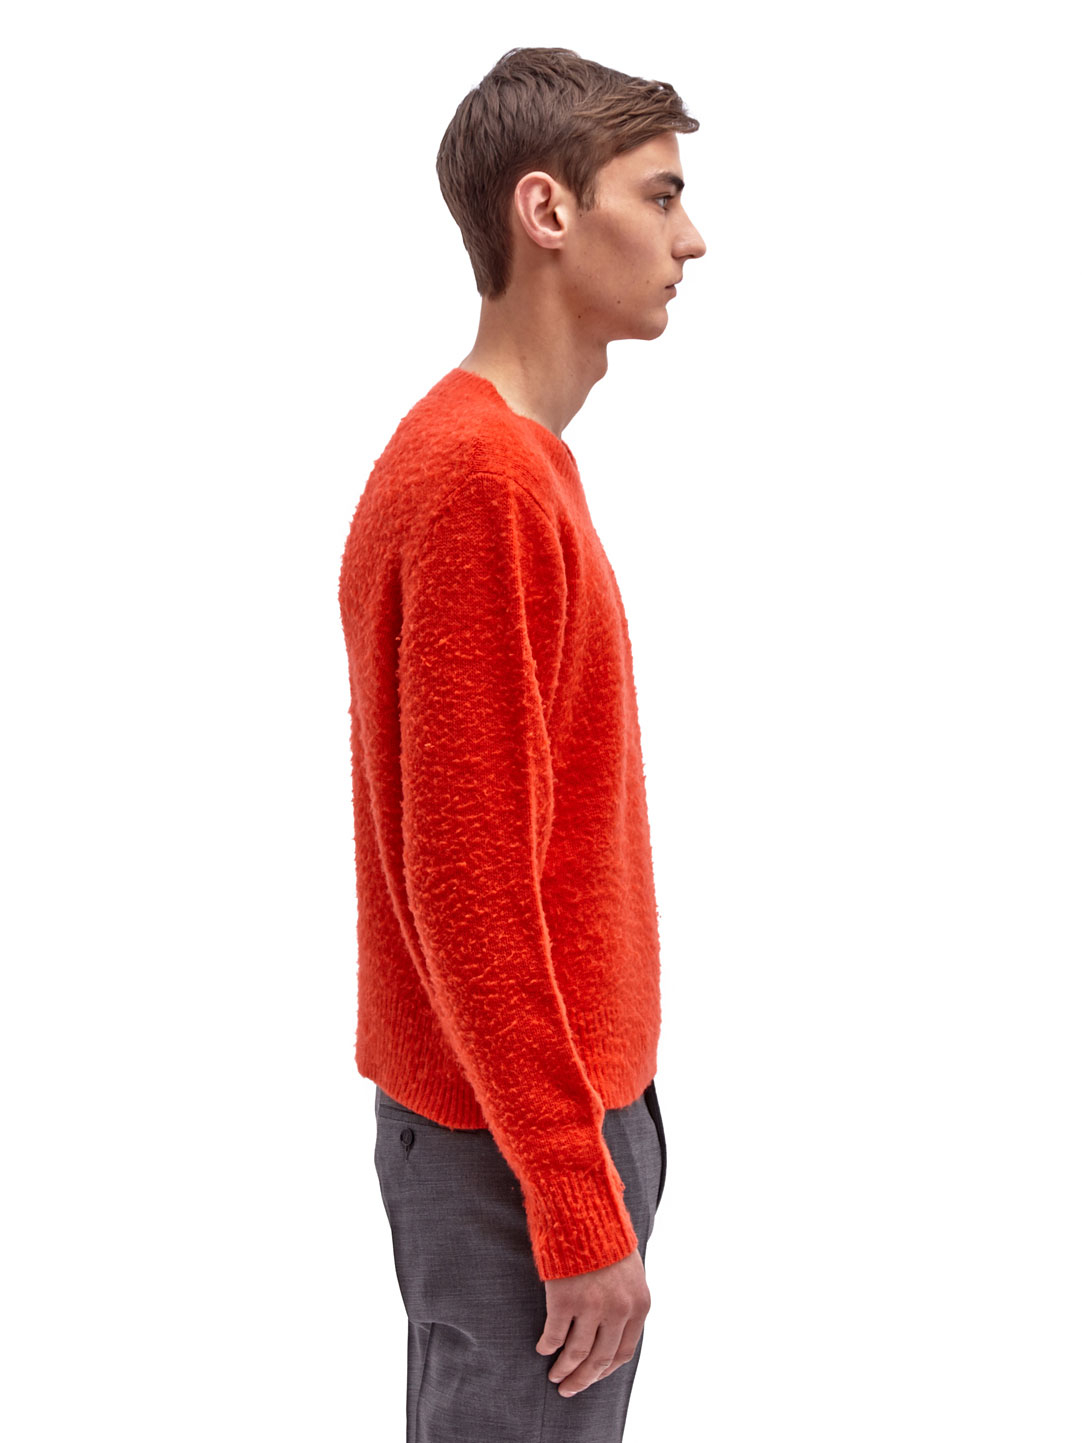 Acne Studios Peele Sweater in Orange for Men - Lyst